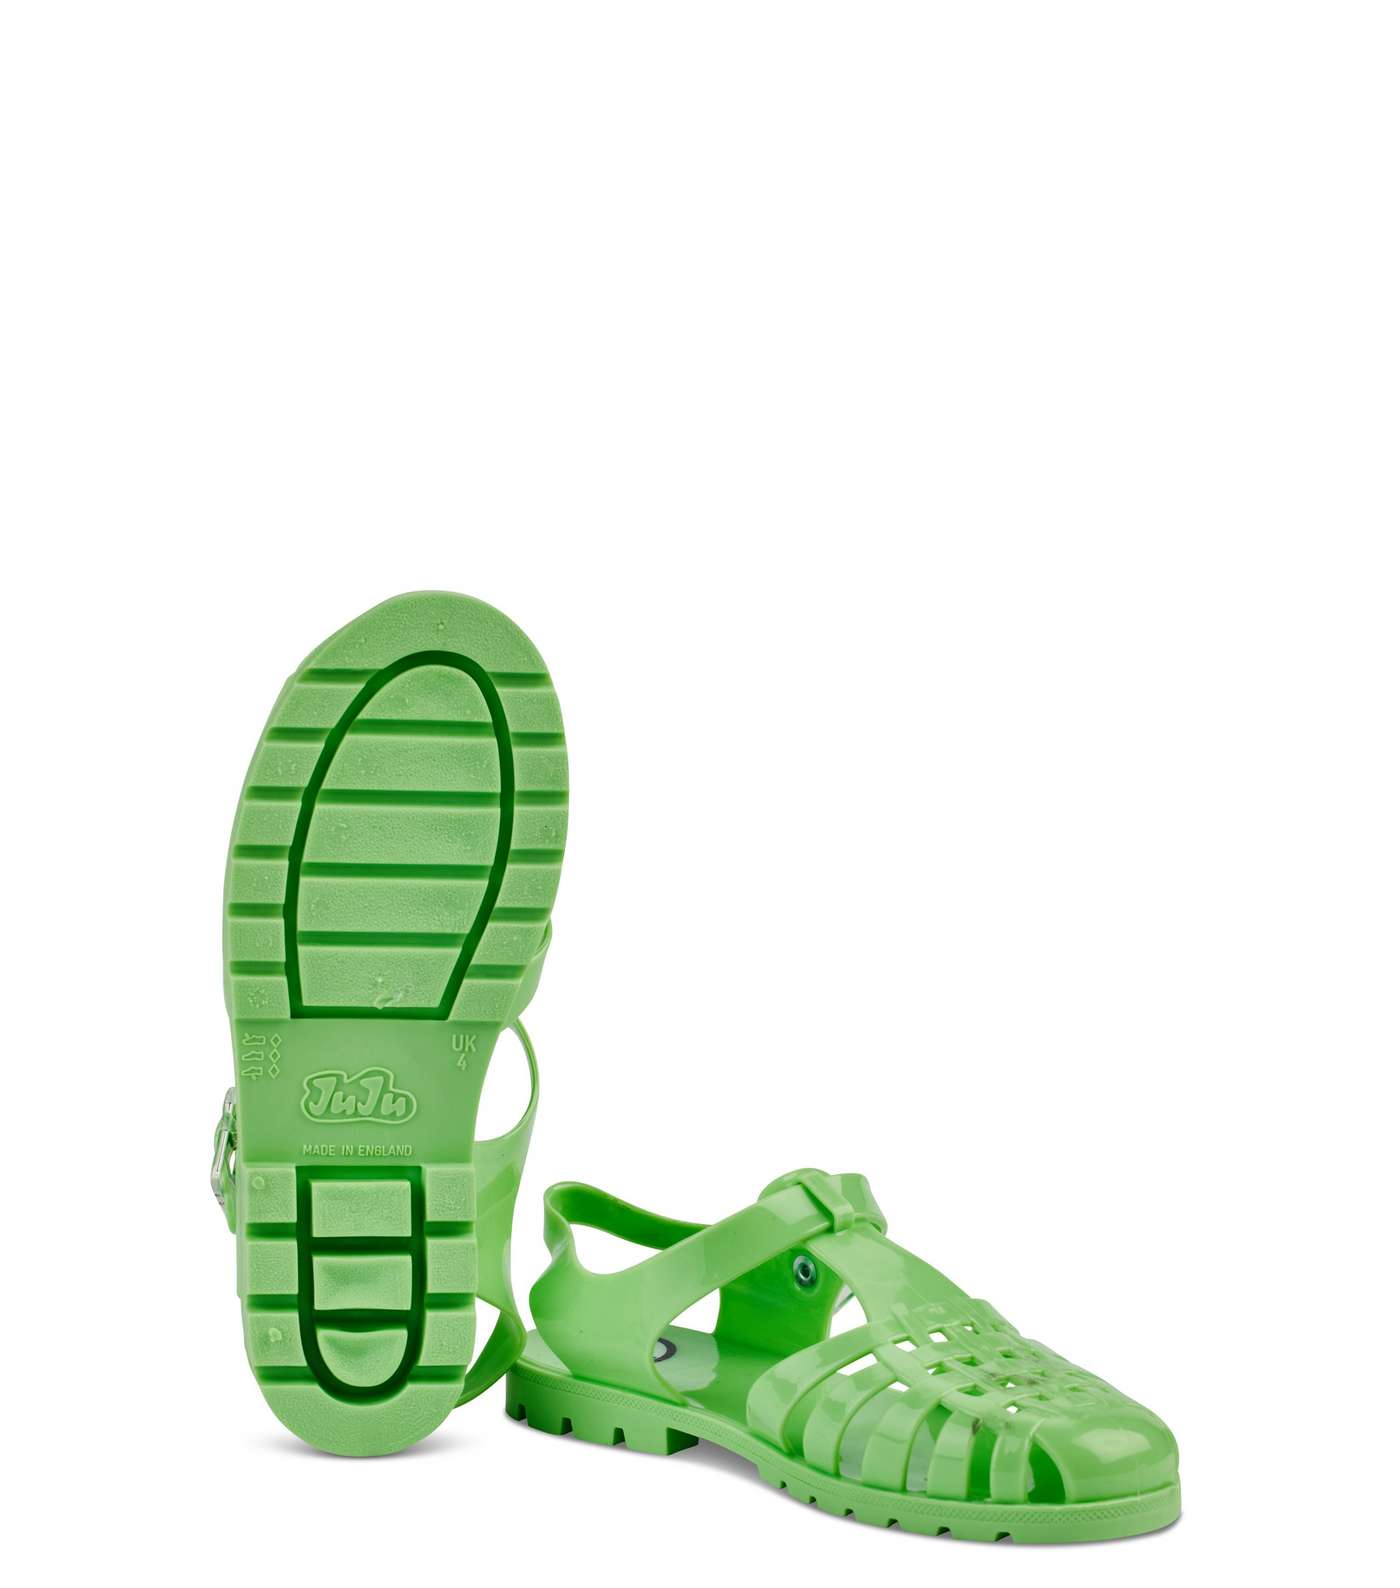 JUJU Light Green Jelly Sandals Image 3